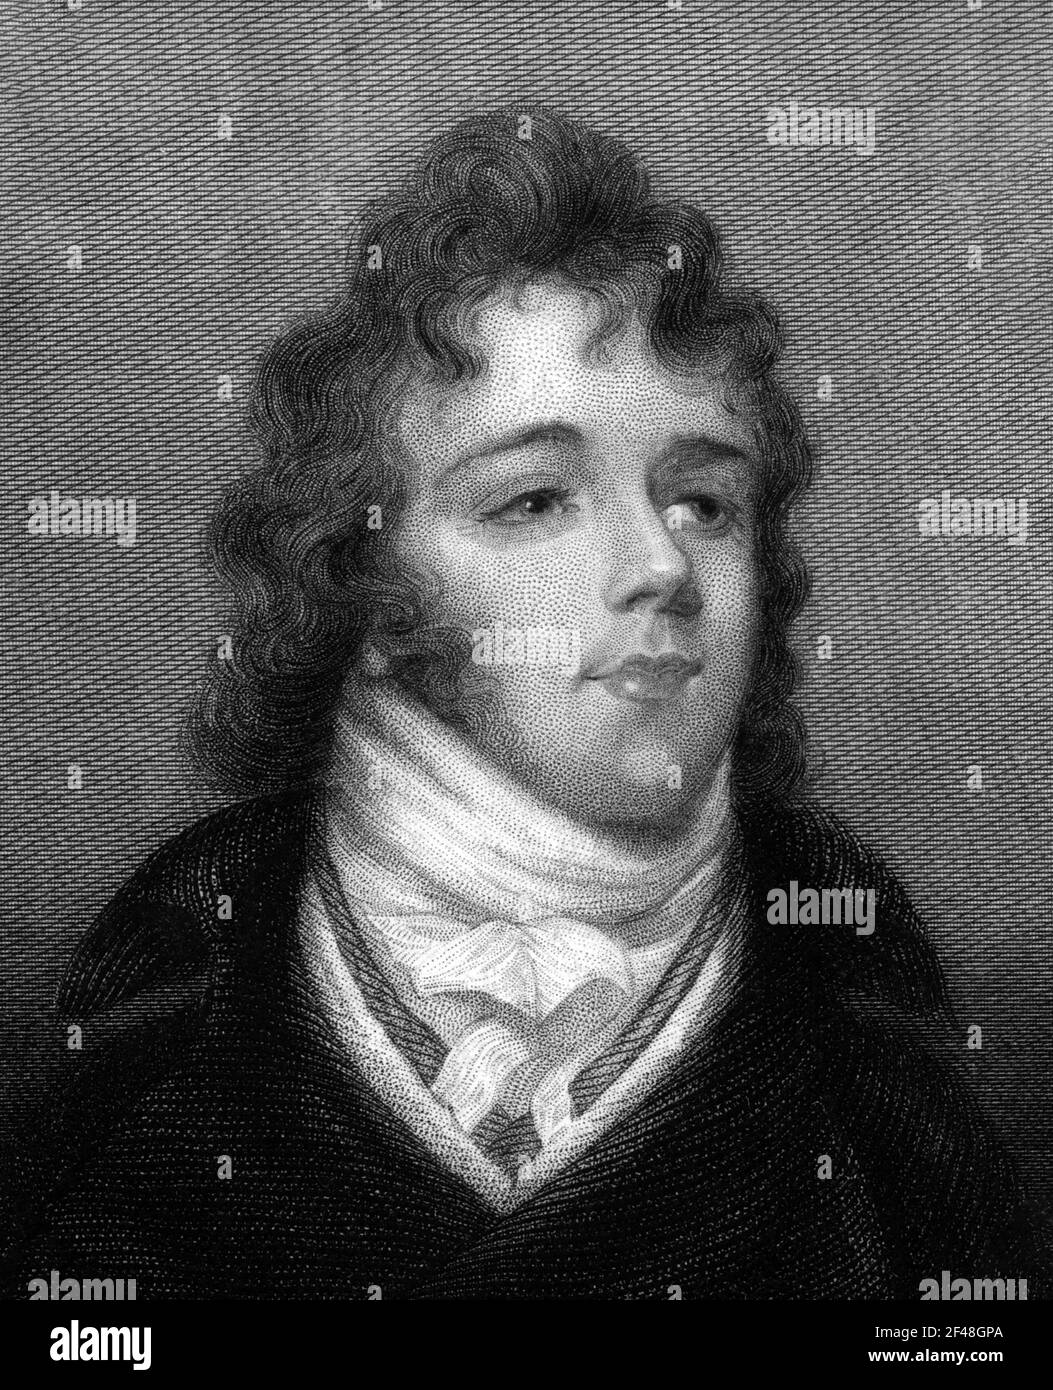 Beau Brummell. Retrato de la dandy Regencia, George Bryan 'Beau' Brummell (1778-1840), grabado del siglo 19th Foto de stock